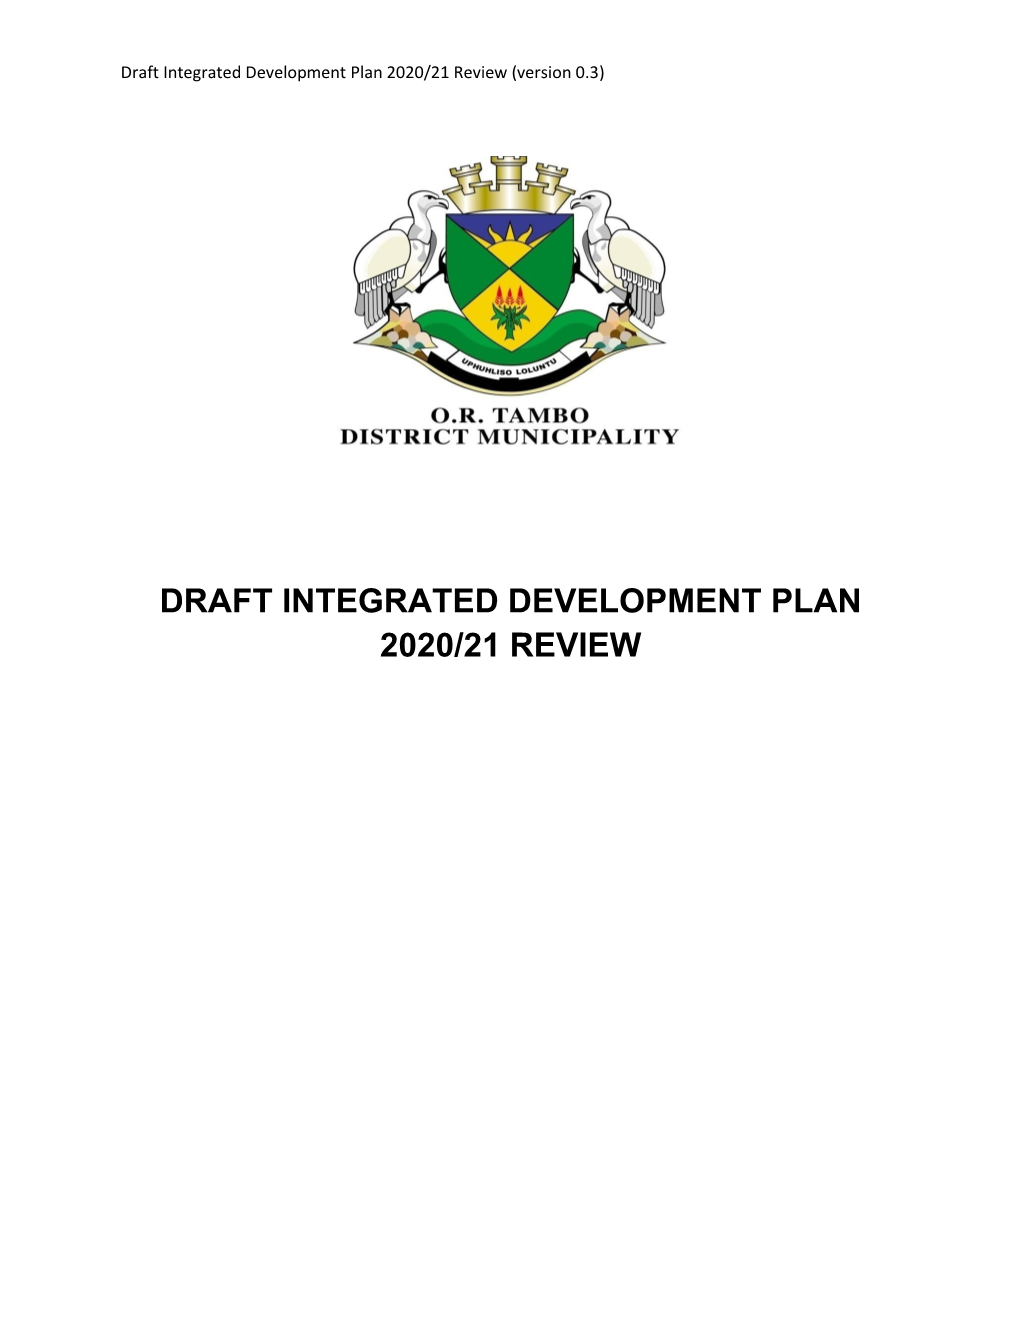 Draft Integrated Development Plan 2020/21 Review (Version 0.3)